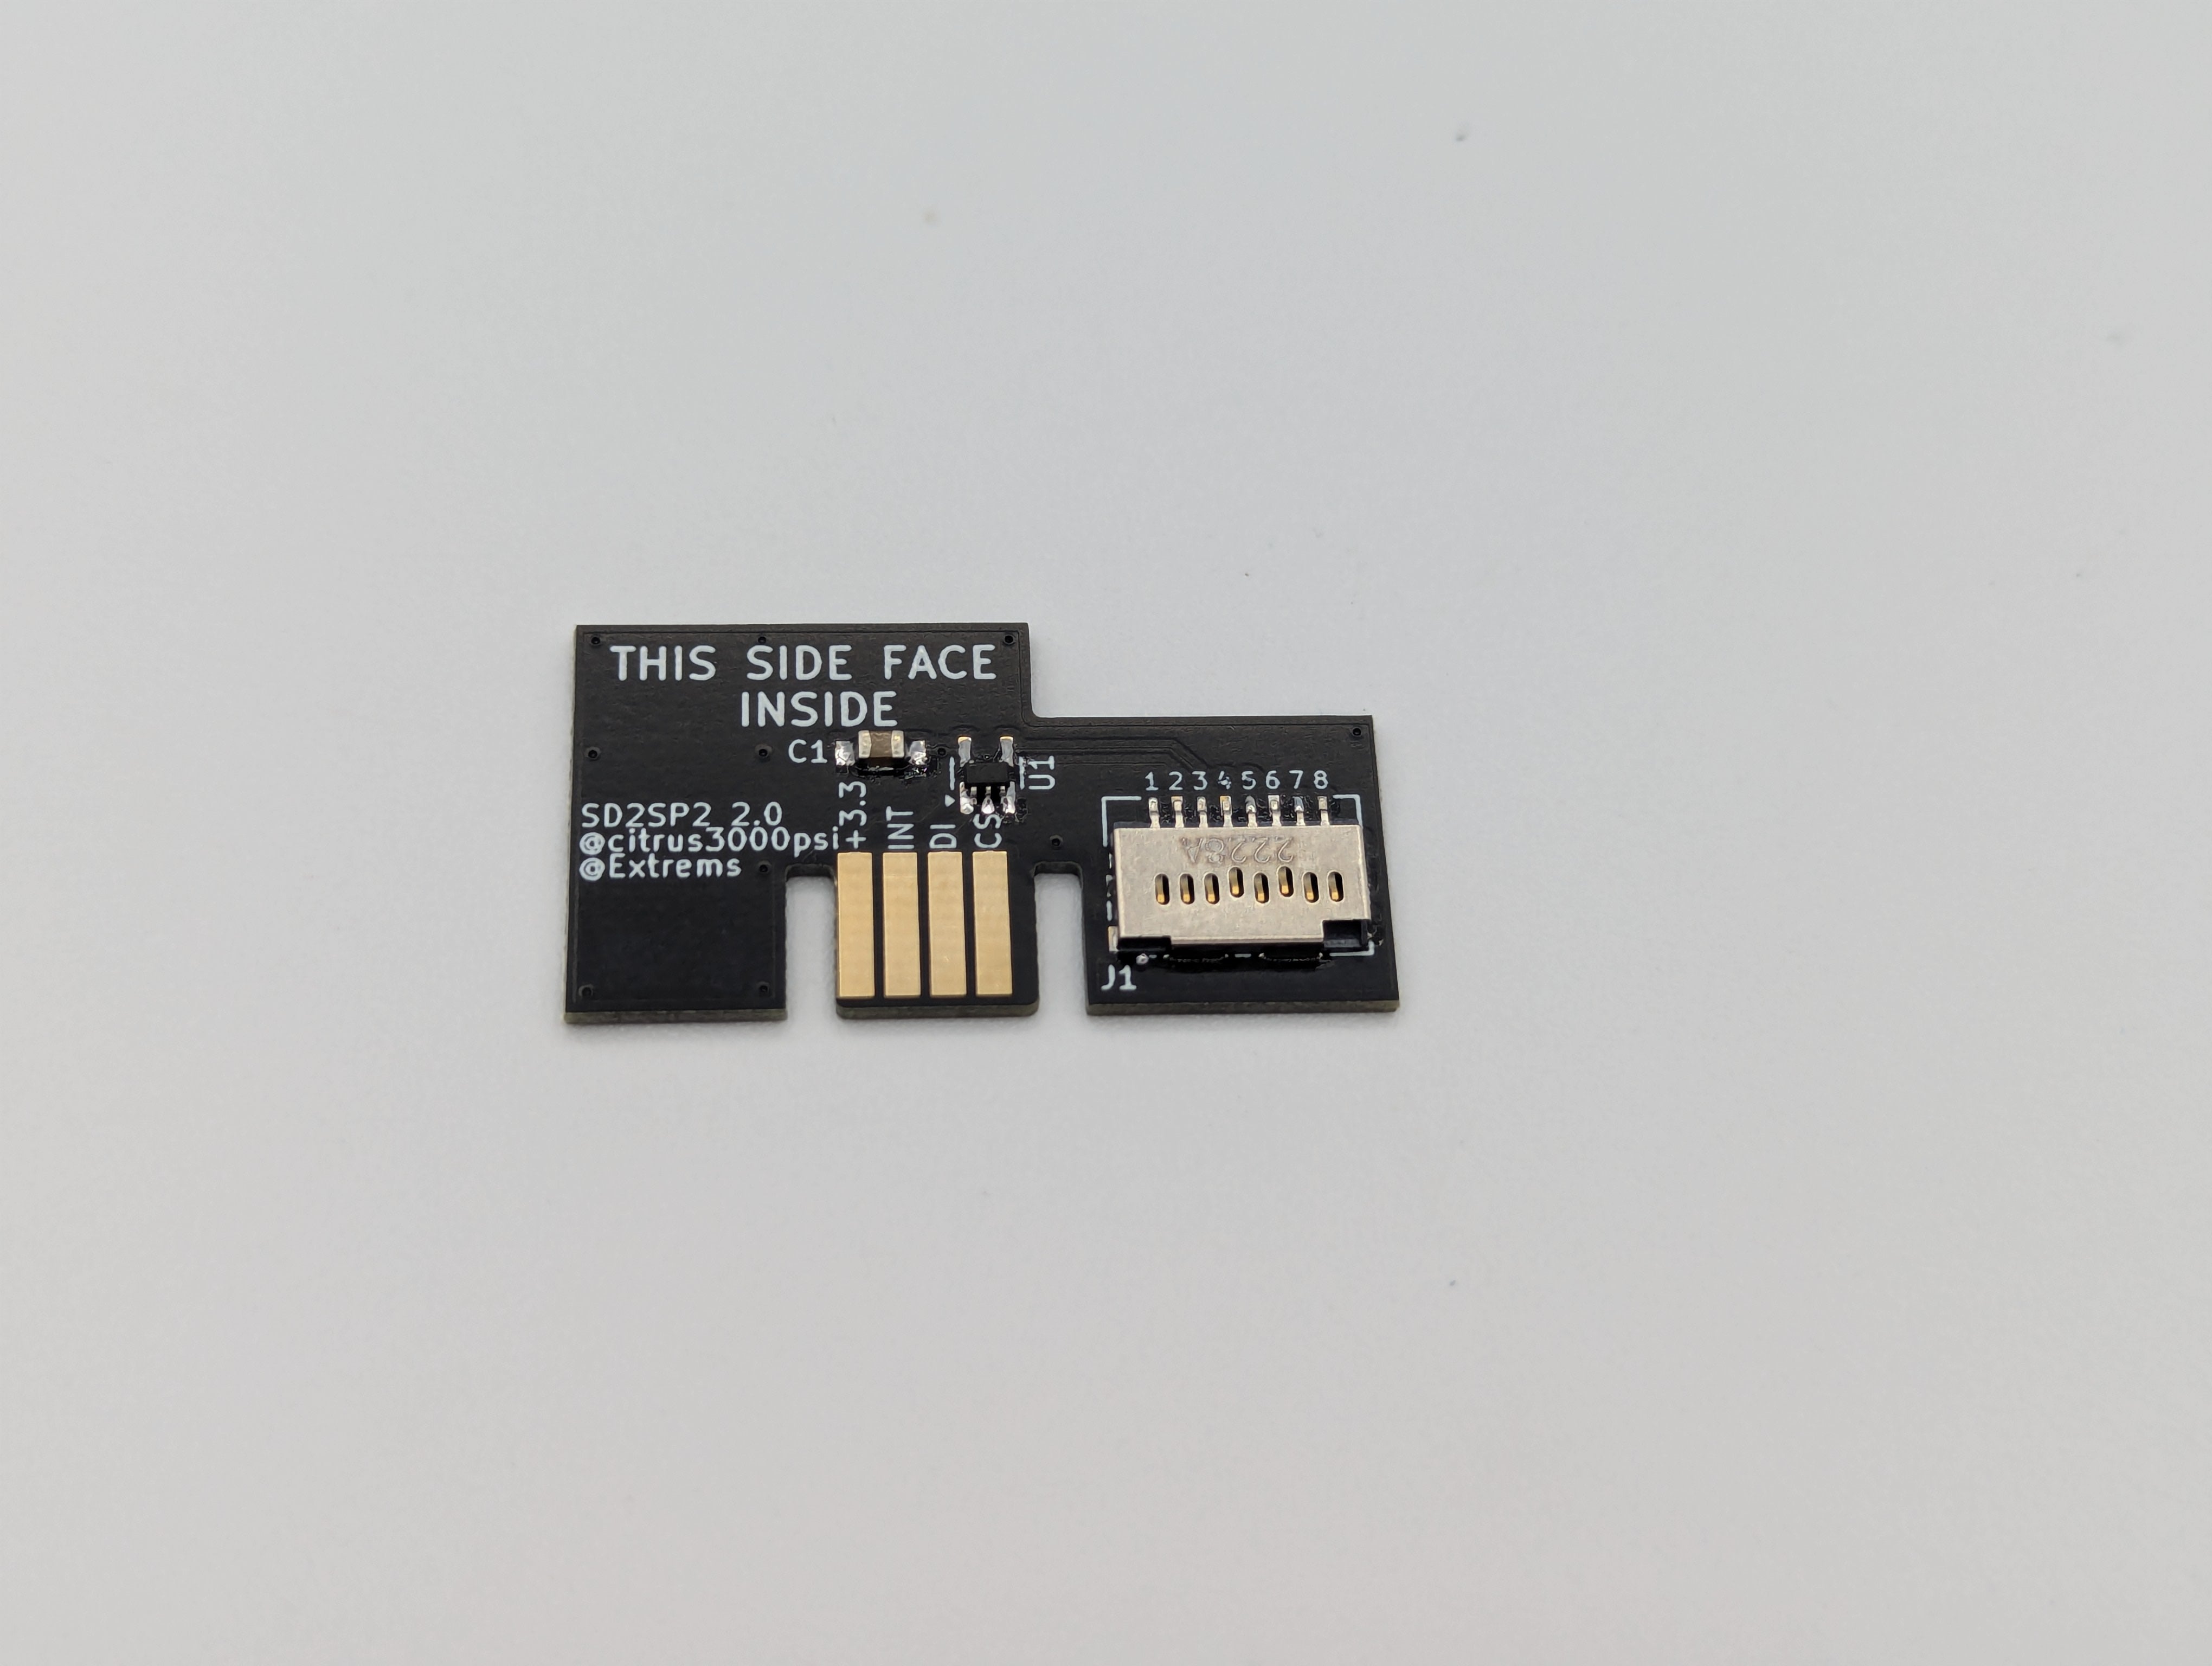 GameCube SD2SP2 V2.0 SD Card Adapter for Serial Port 2